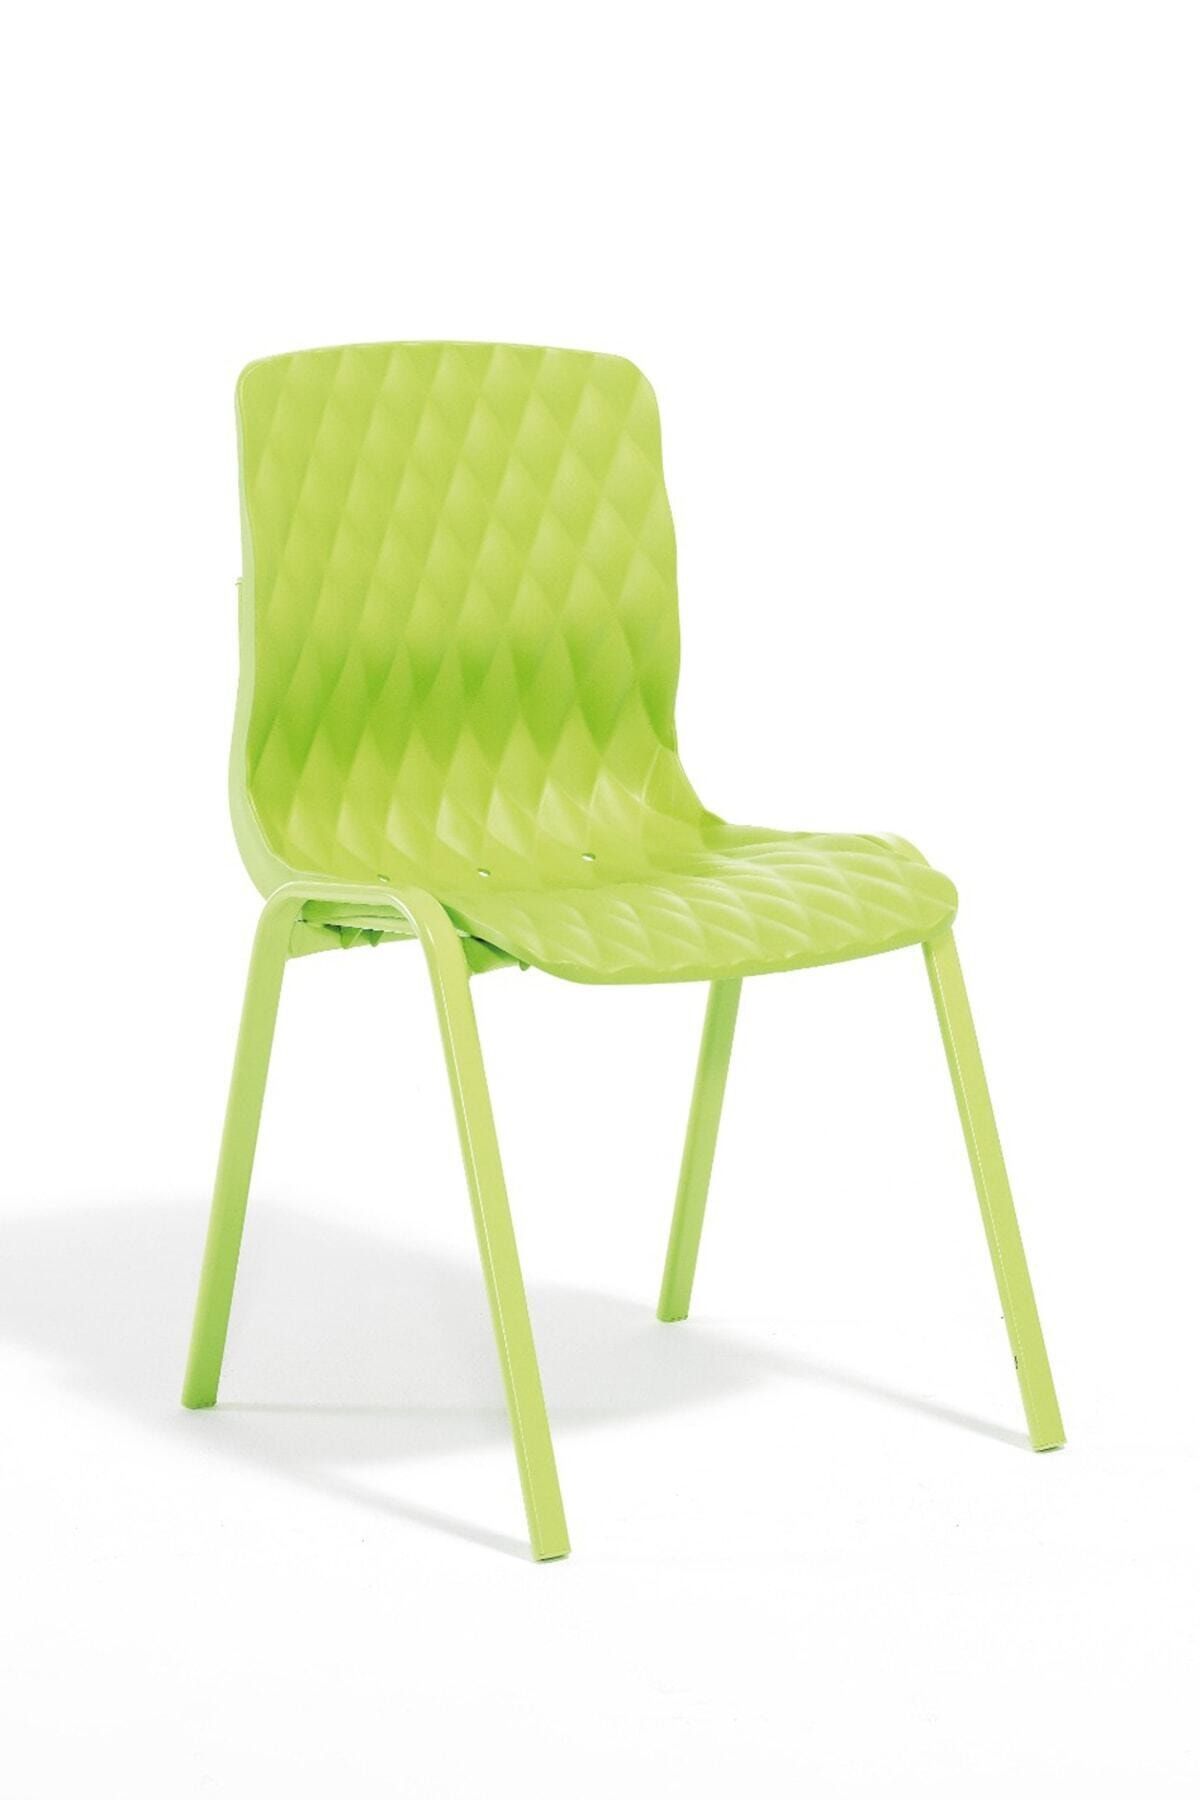 Novussi Royal Sandalye Yeşil_0